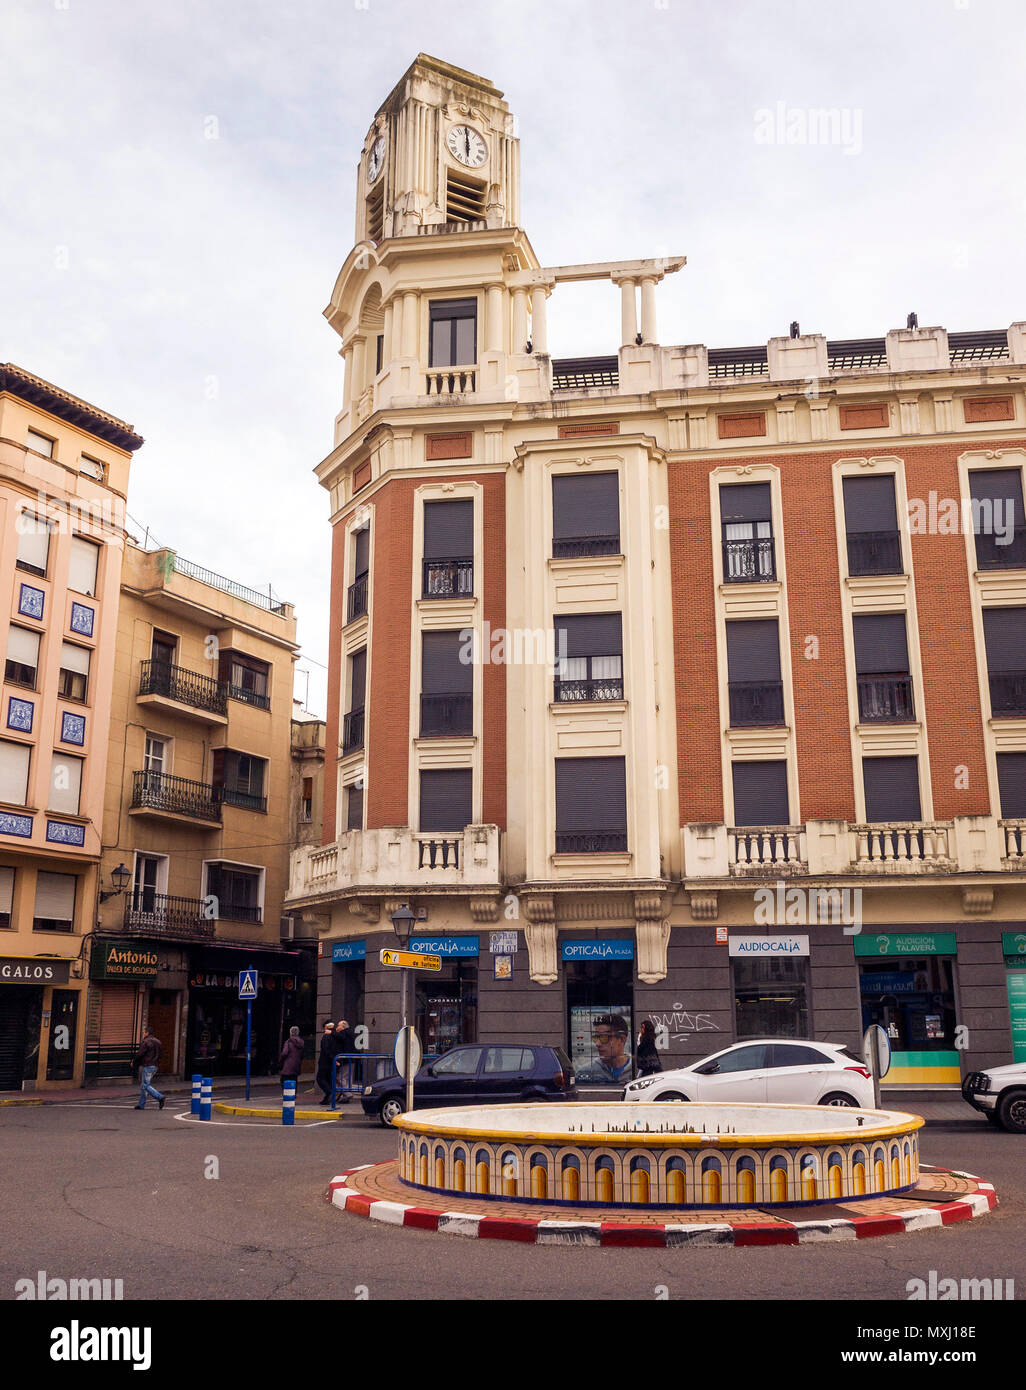 Plaza del reloj. Talavera de la Reina. Conjunto histórico artístico. Provincia de Toledo. España. Stock Photo